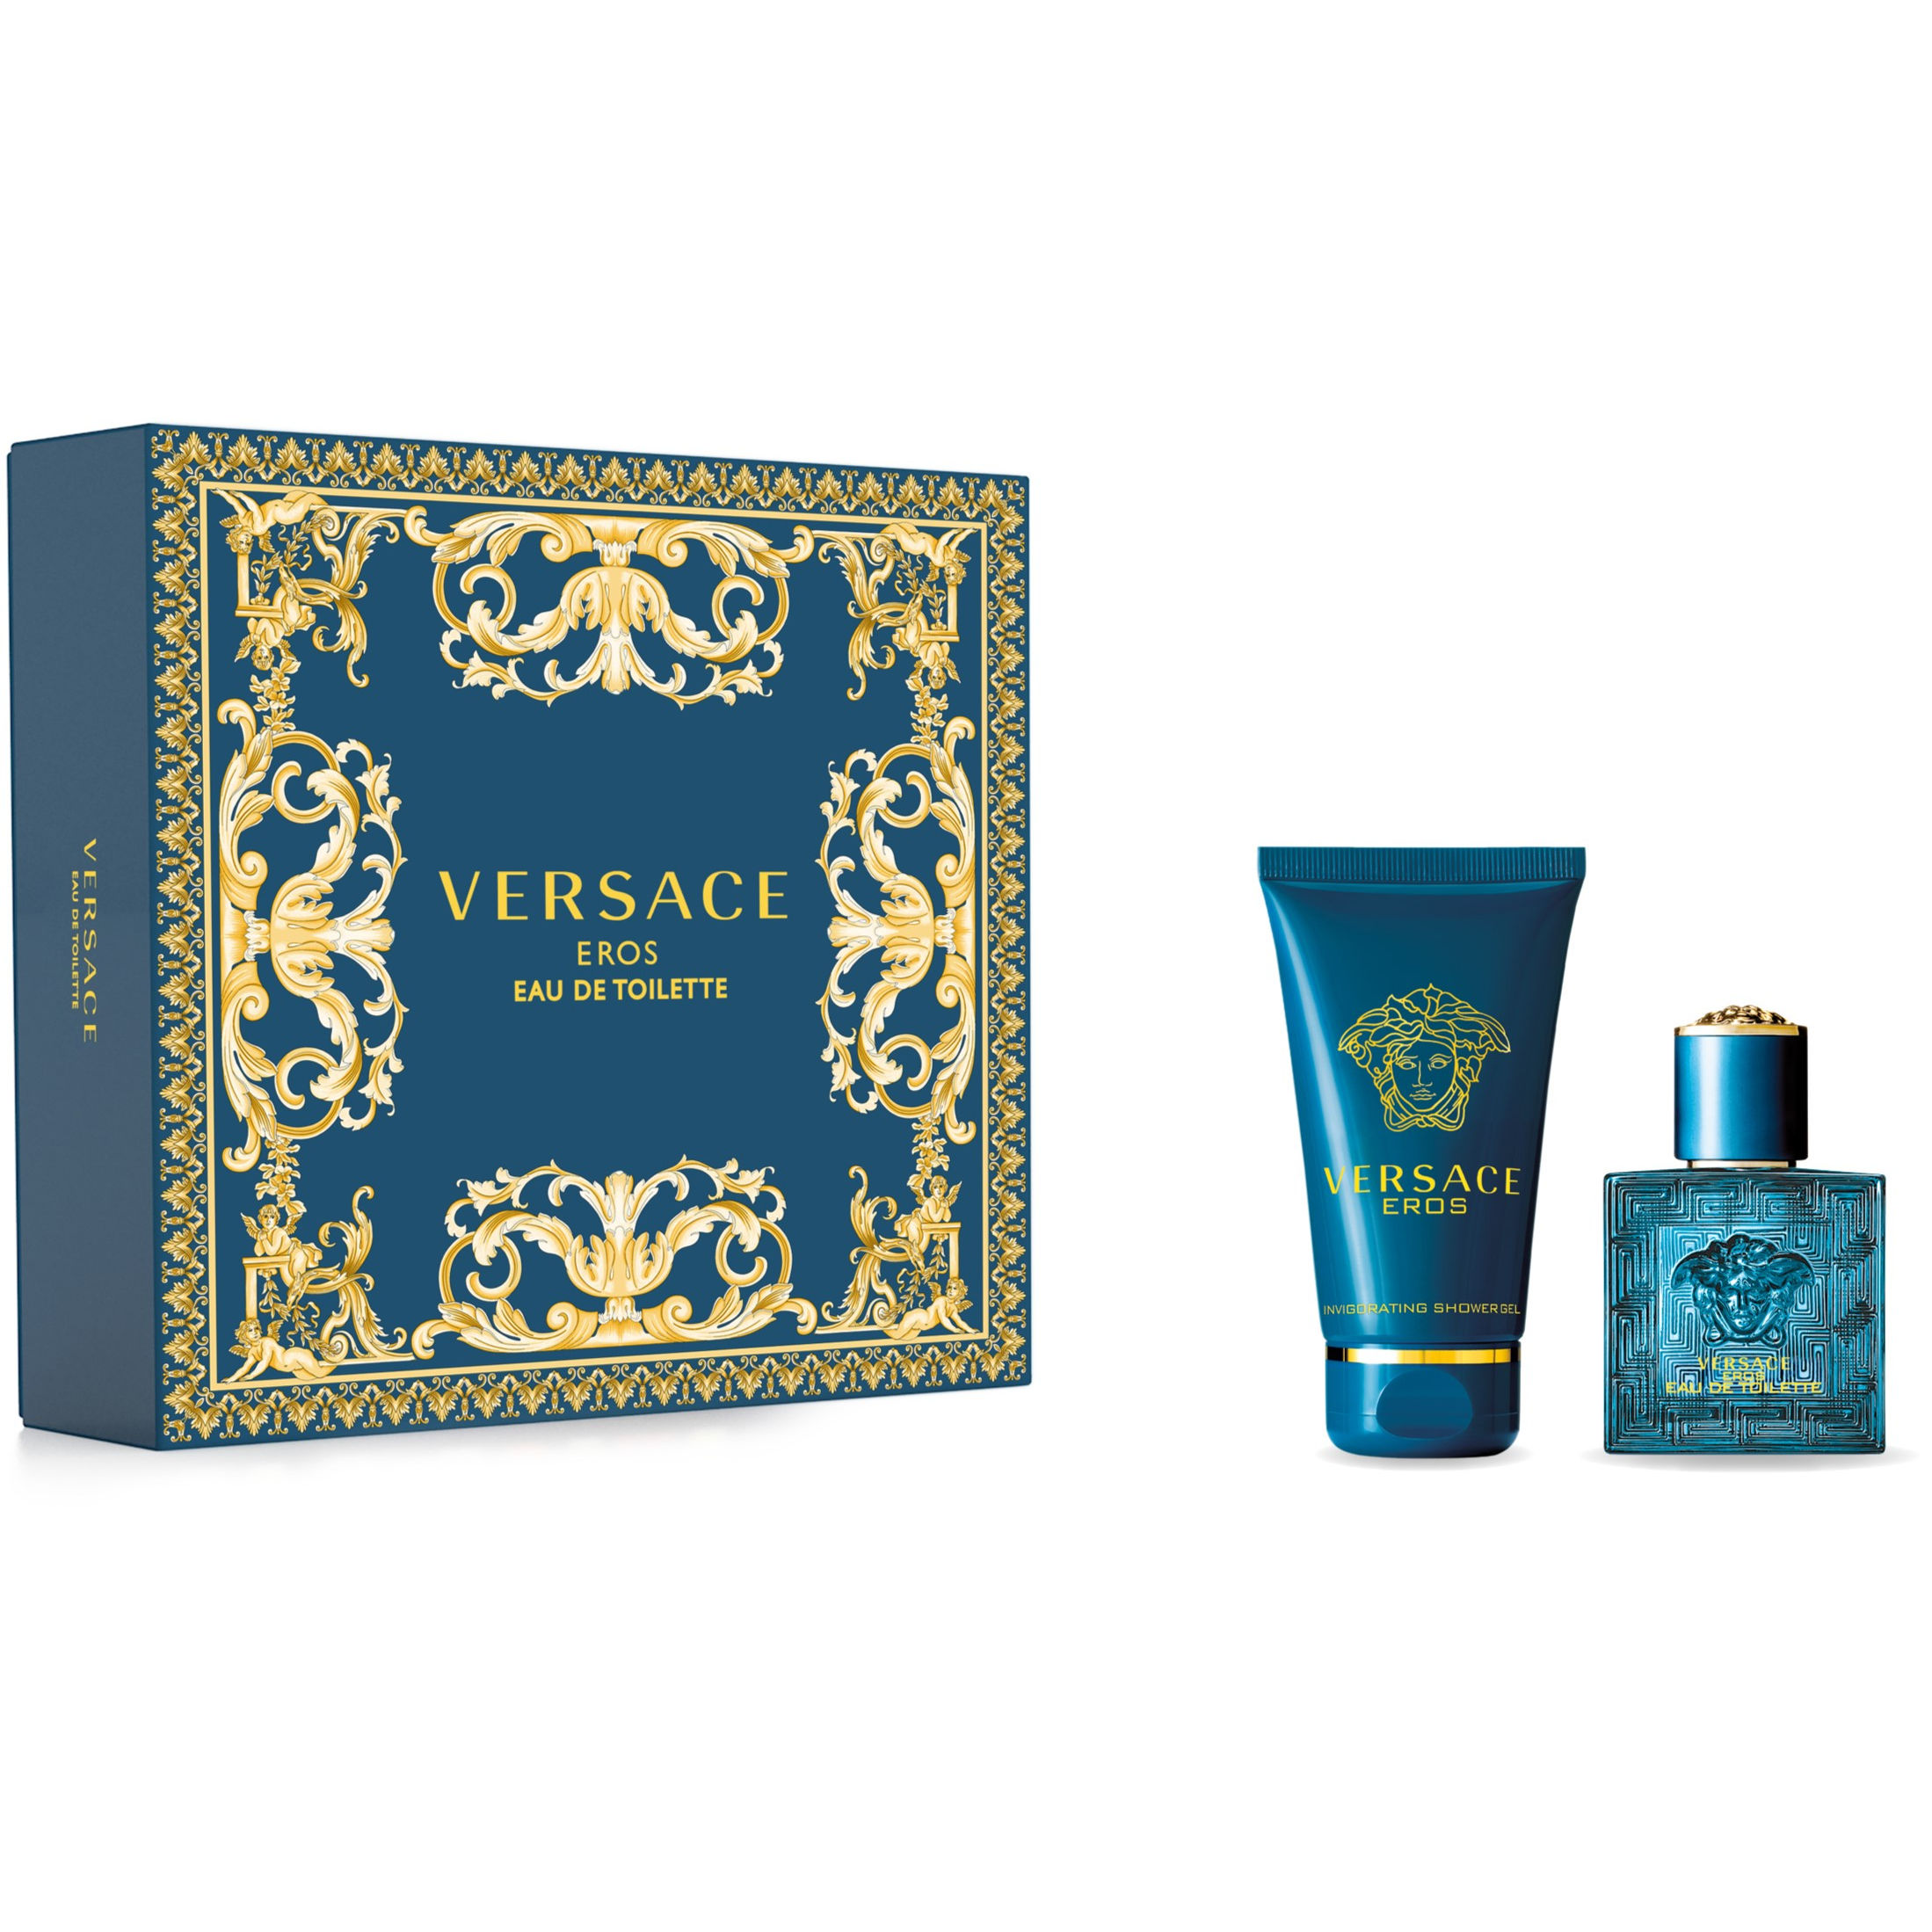 Versace Eros Gift set 2 st.